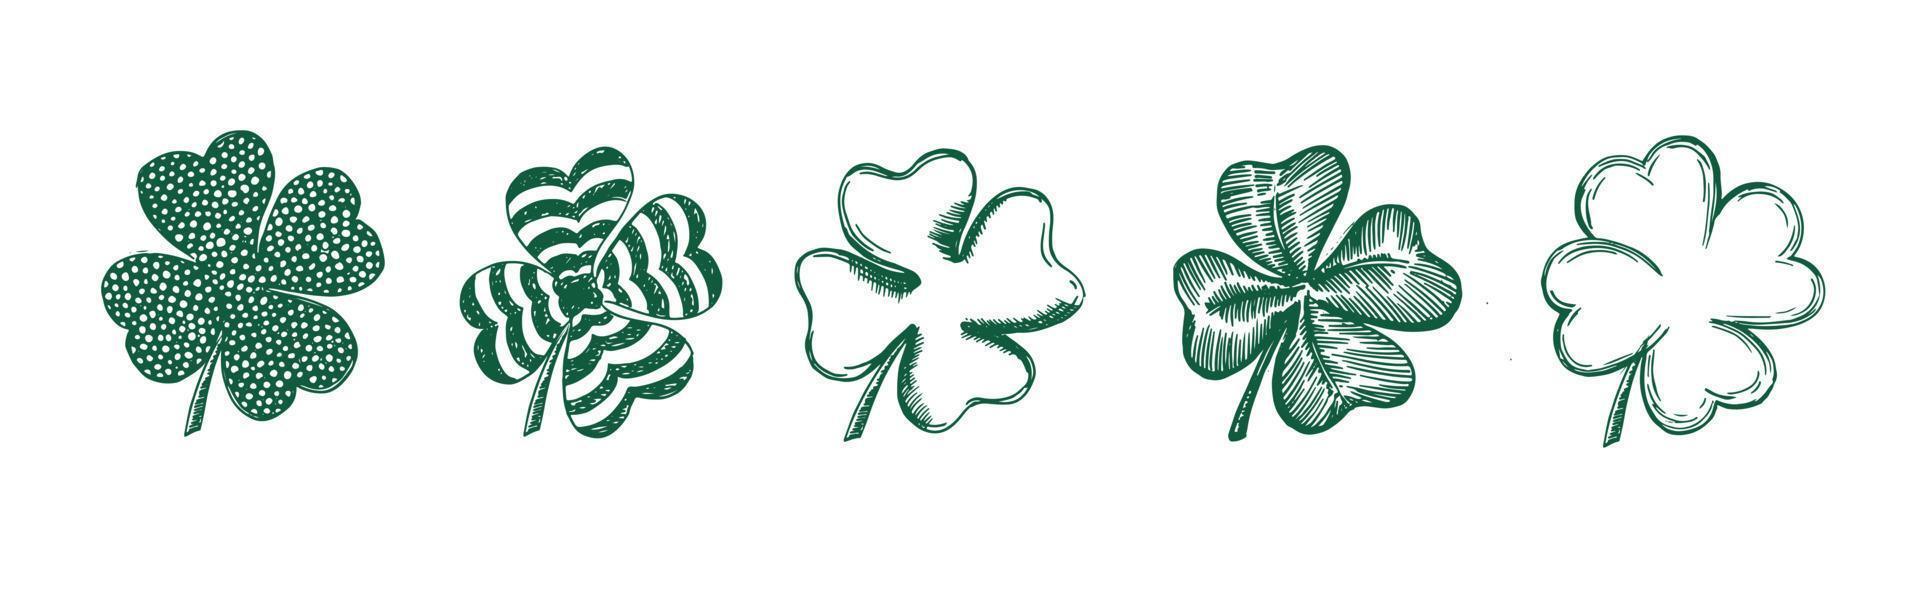 St. Patrick's Day. Sketch set clover. Hand drawn illustration. vector